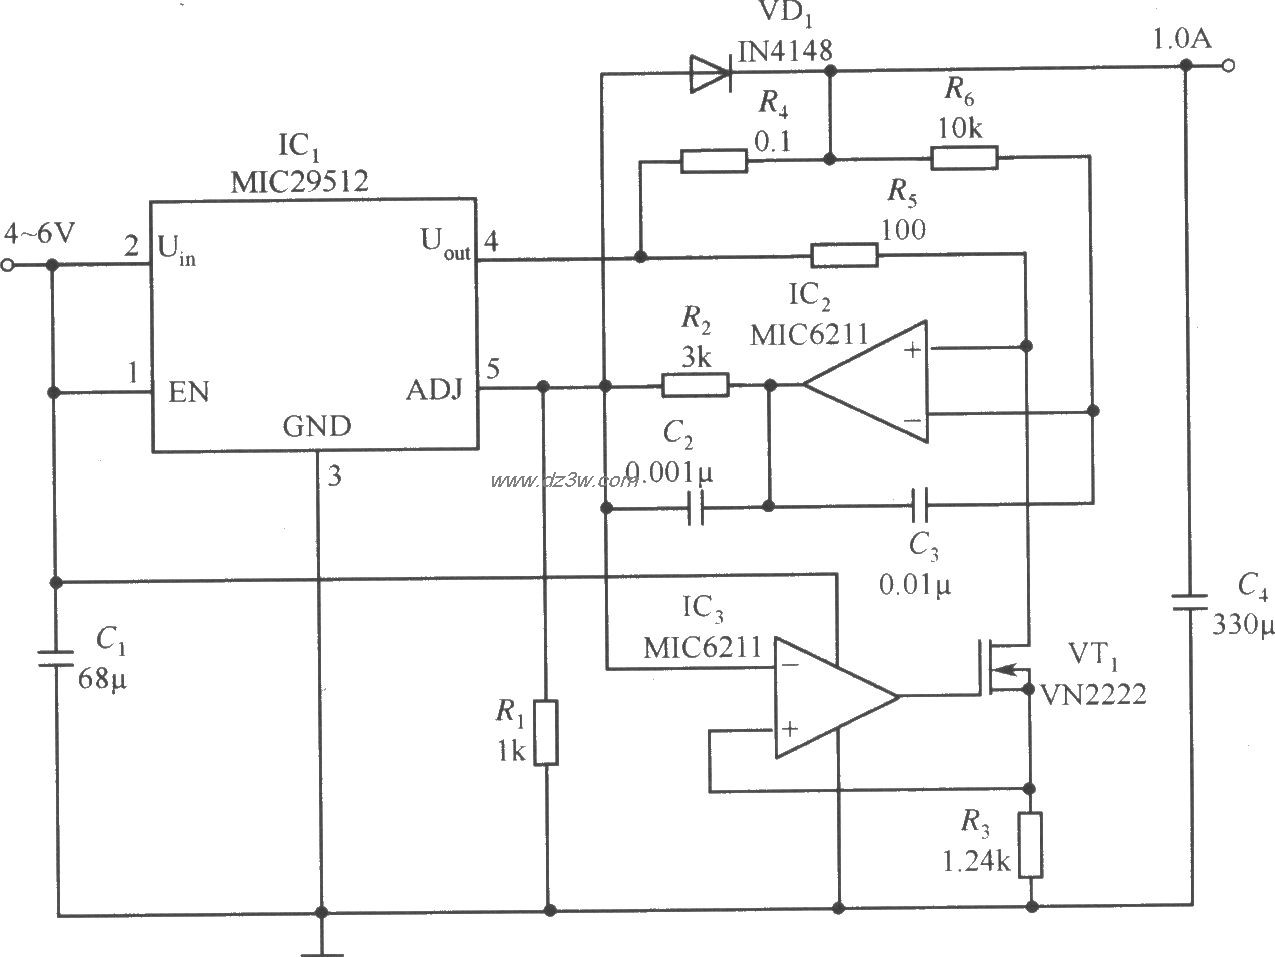 MIC29152構成的輸出電流為1.0A的恆流源電路